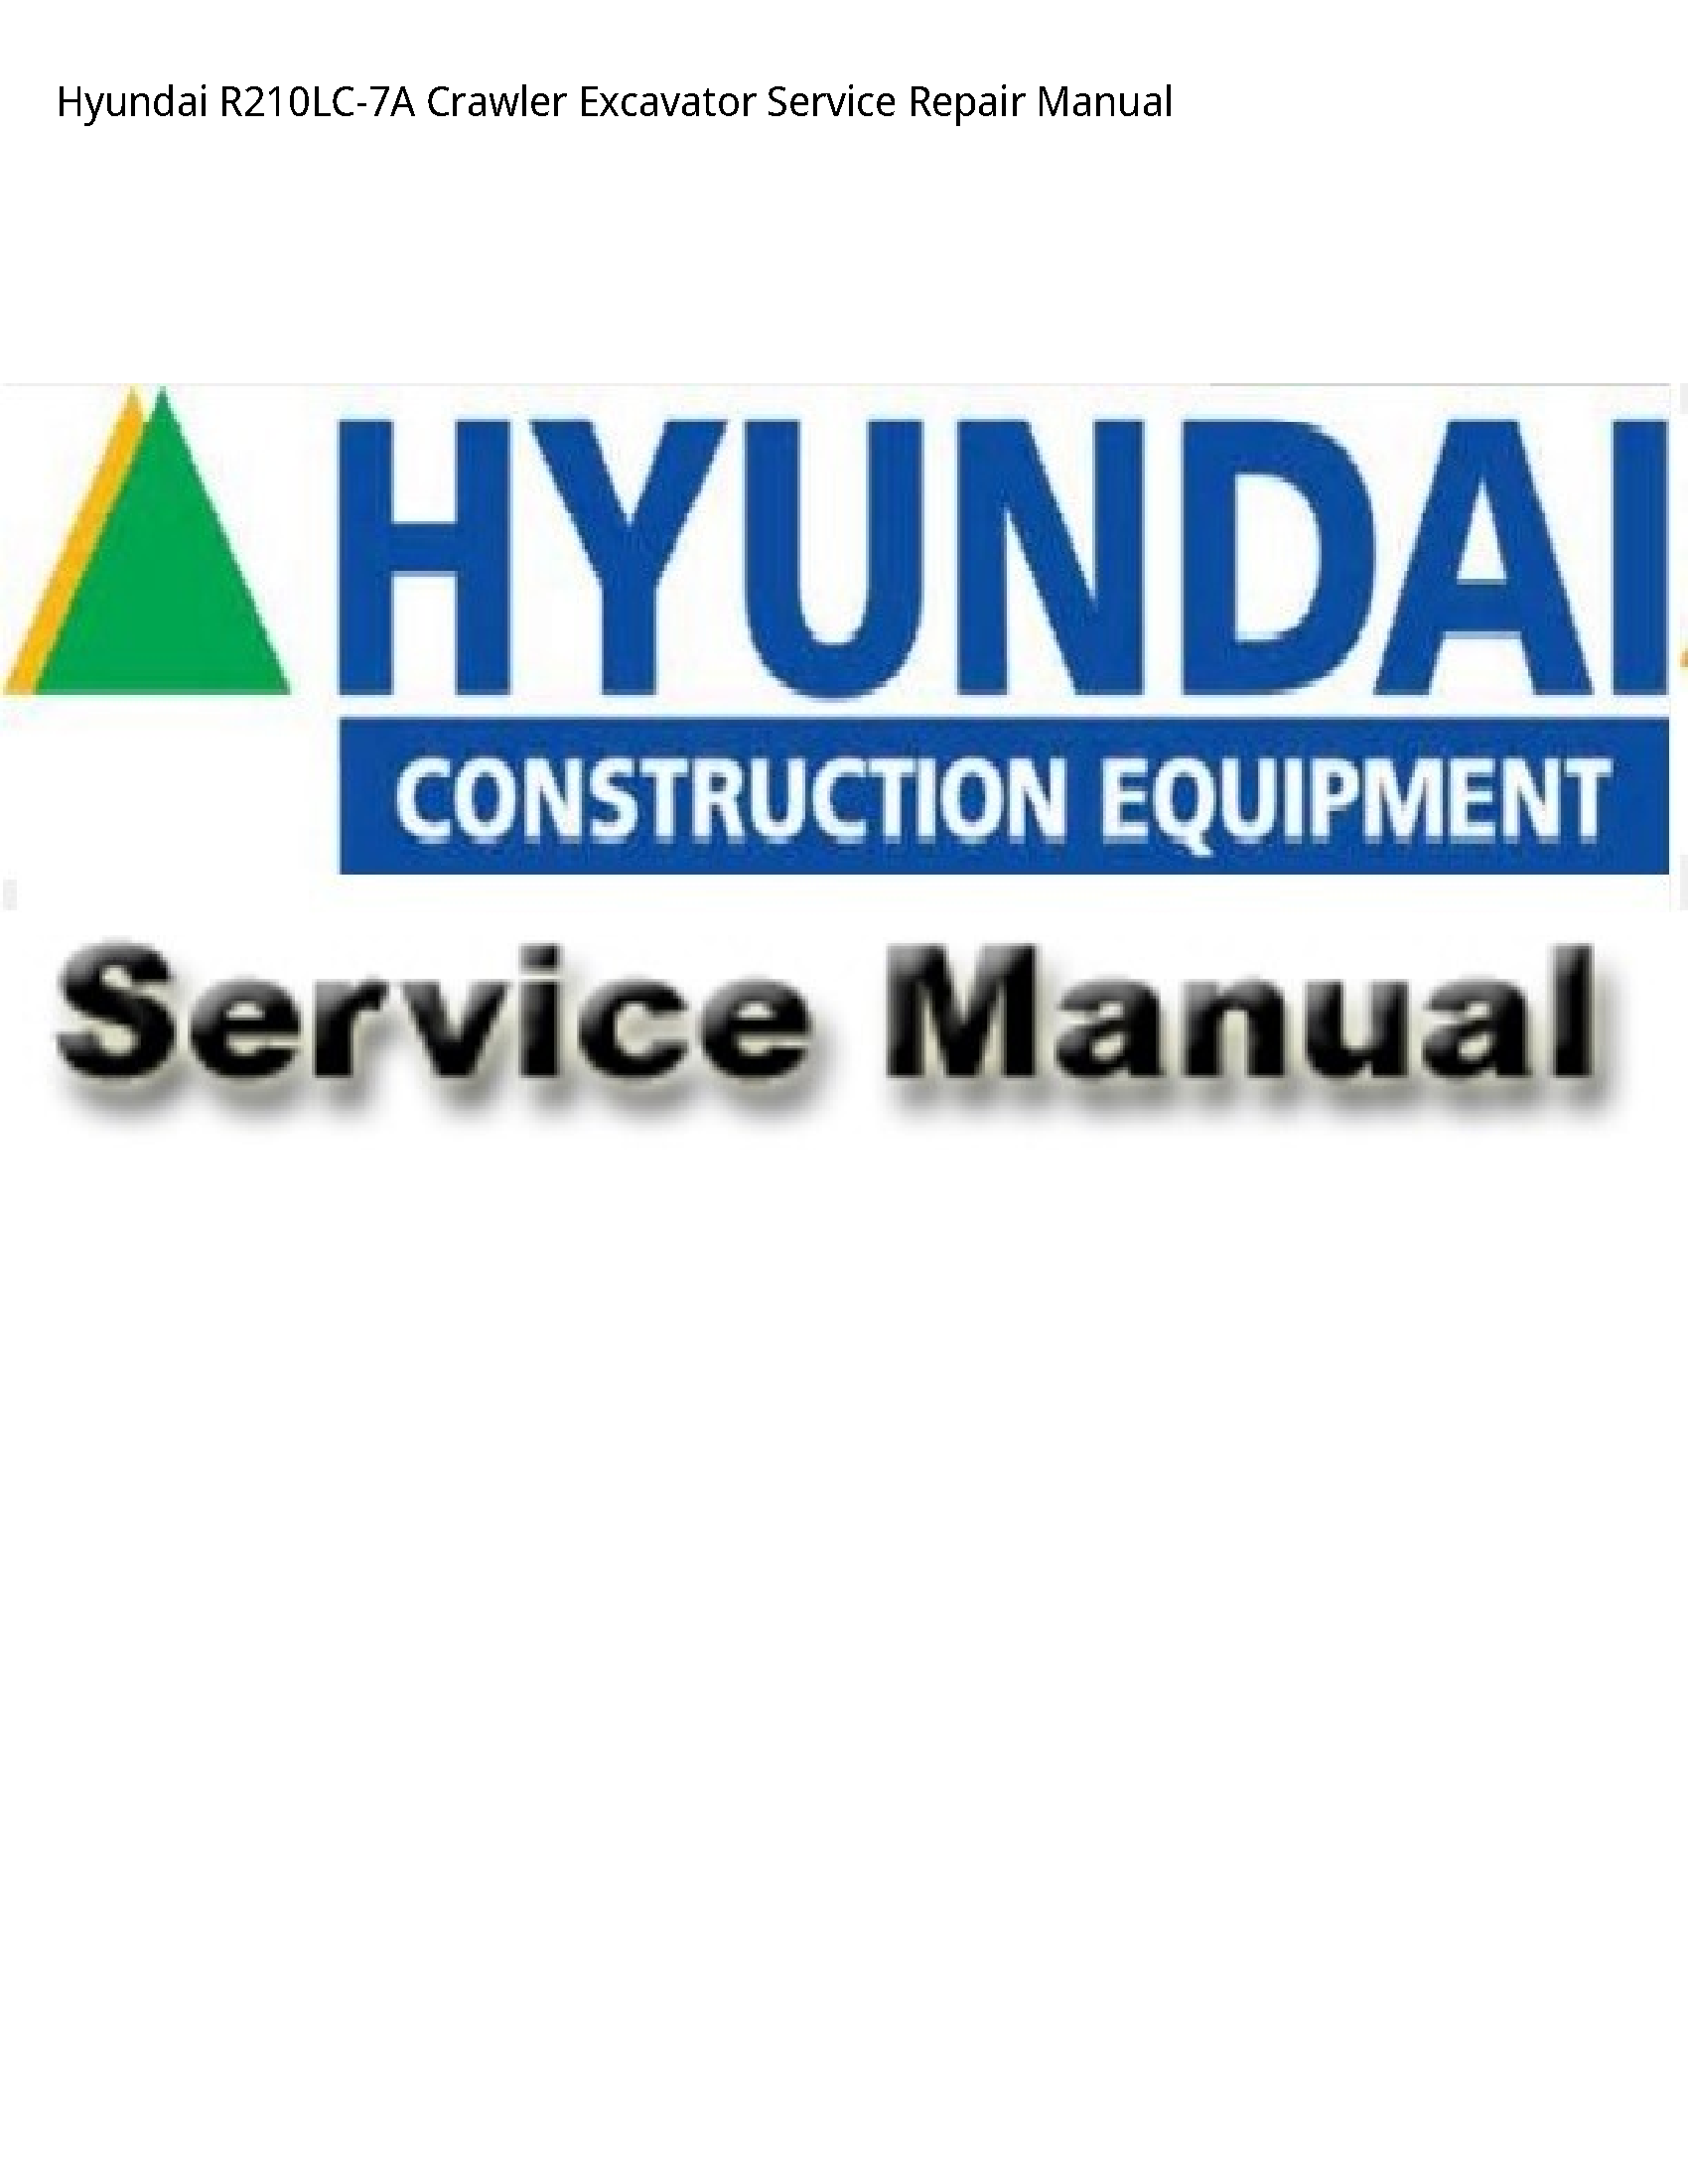 Hyundai R210LC-7A Crawler Excavator manual